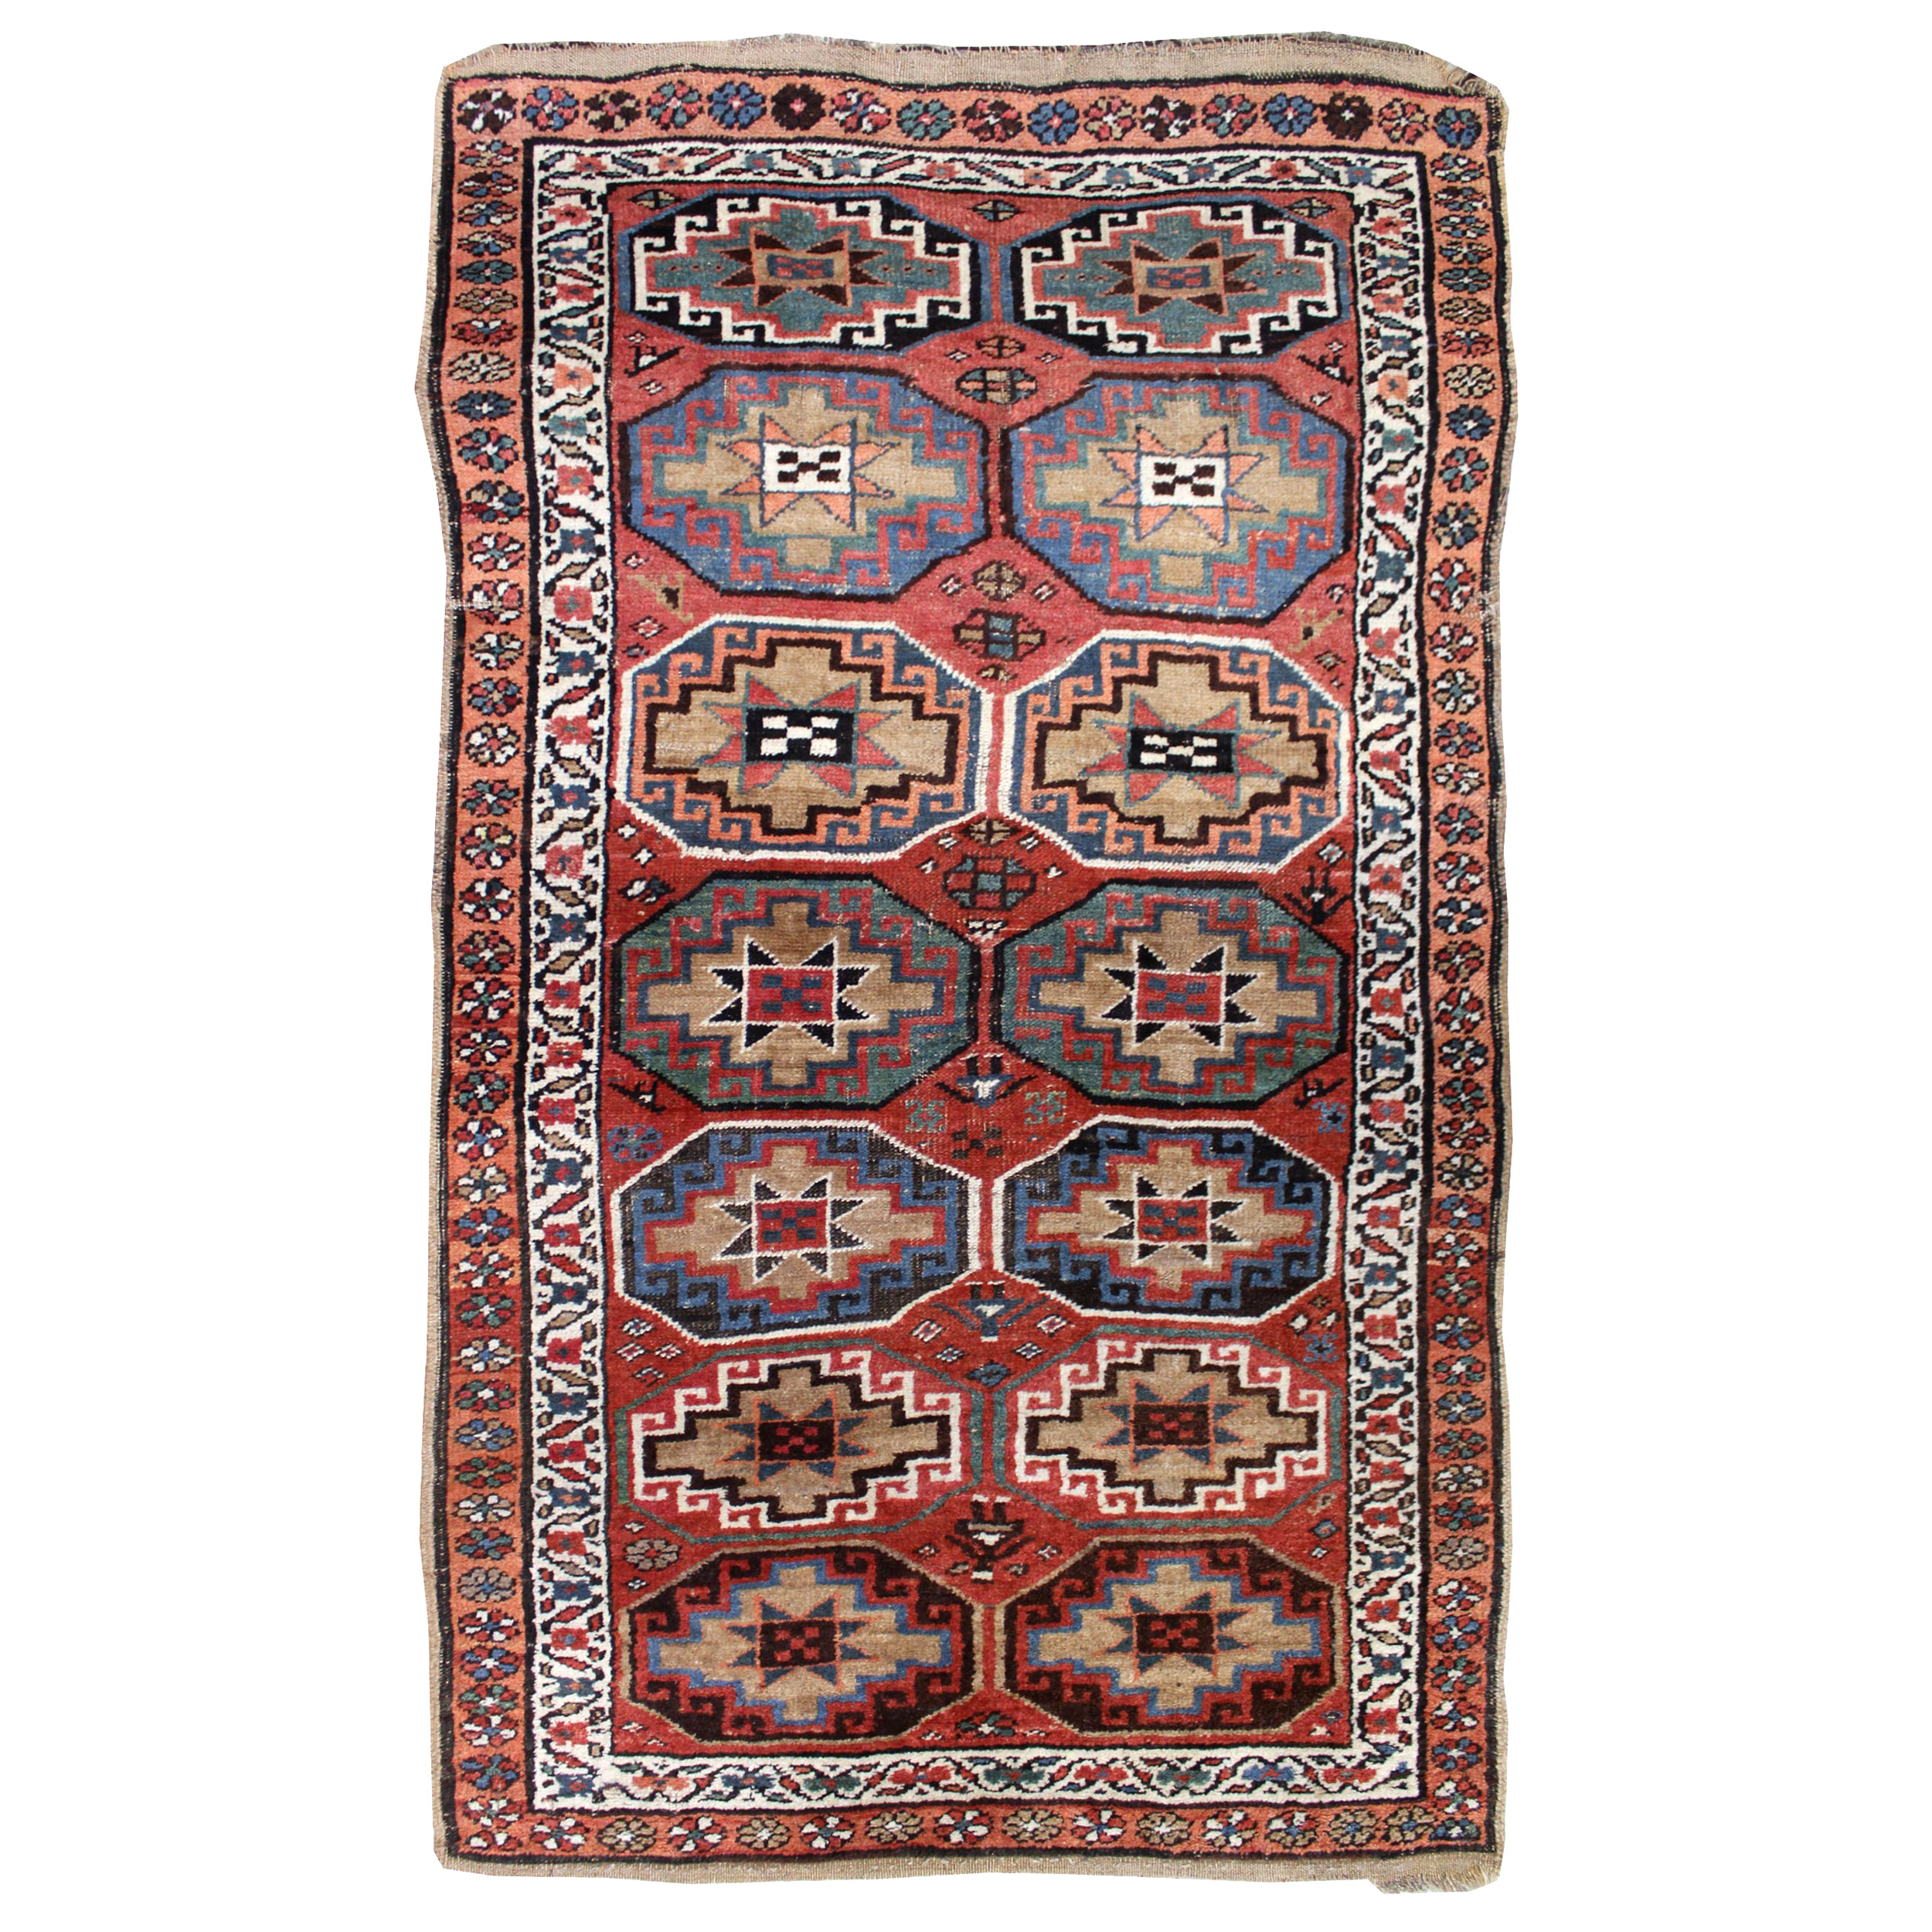 Antique Bidjar Rug with Memling Gul design - Douglas Stock Gallery, antique Oriental rugs Boston,MA area, South Natick, antique rugs